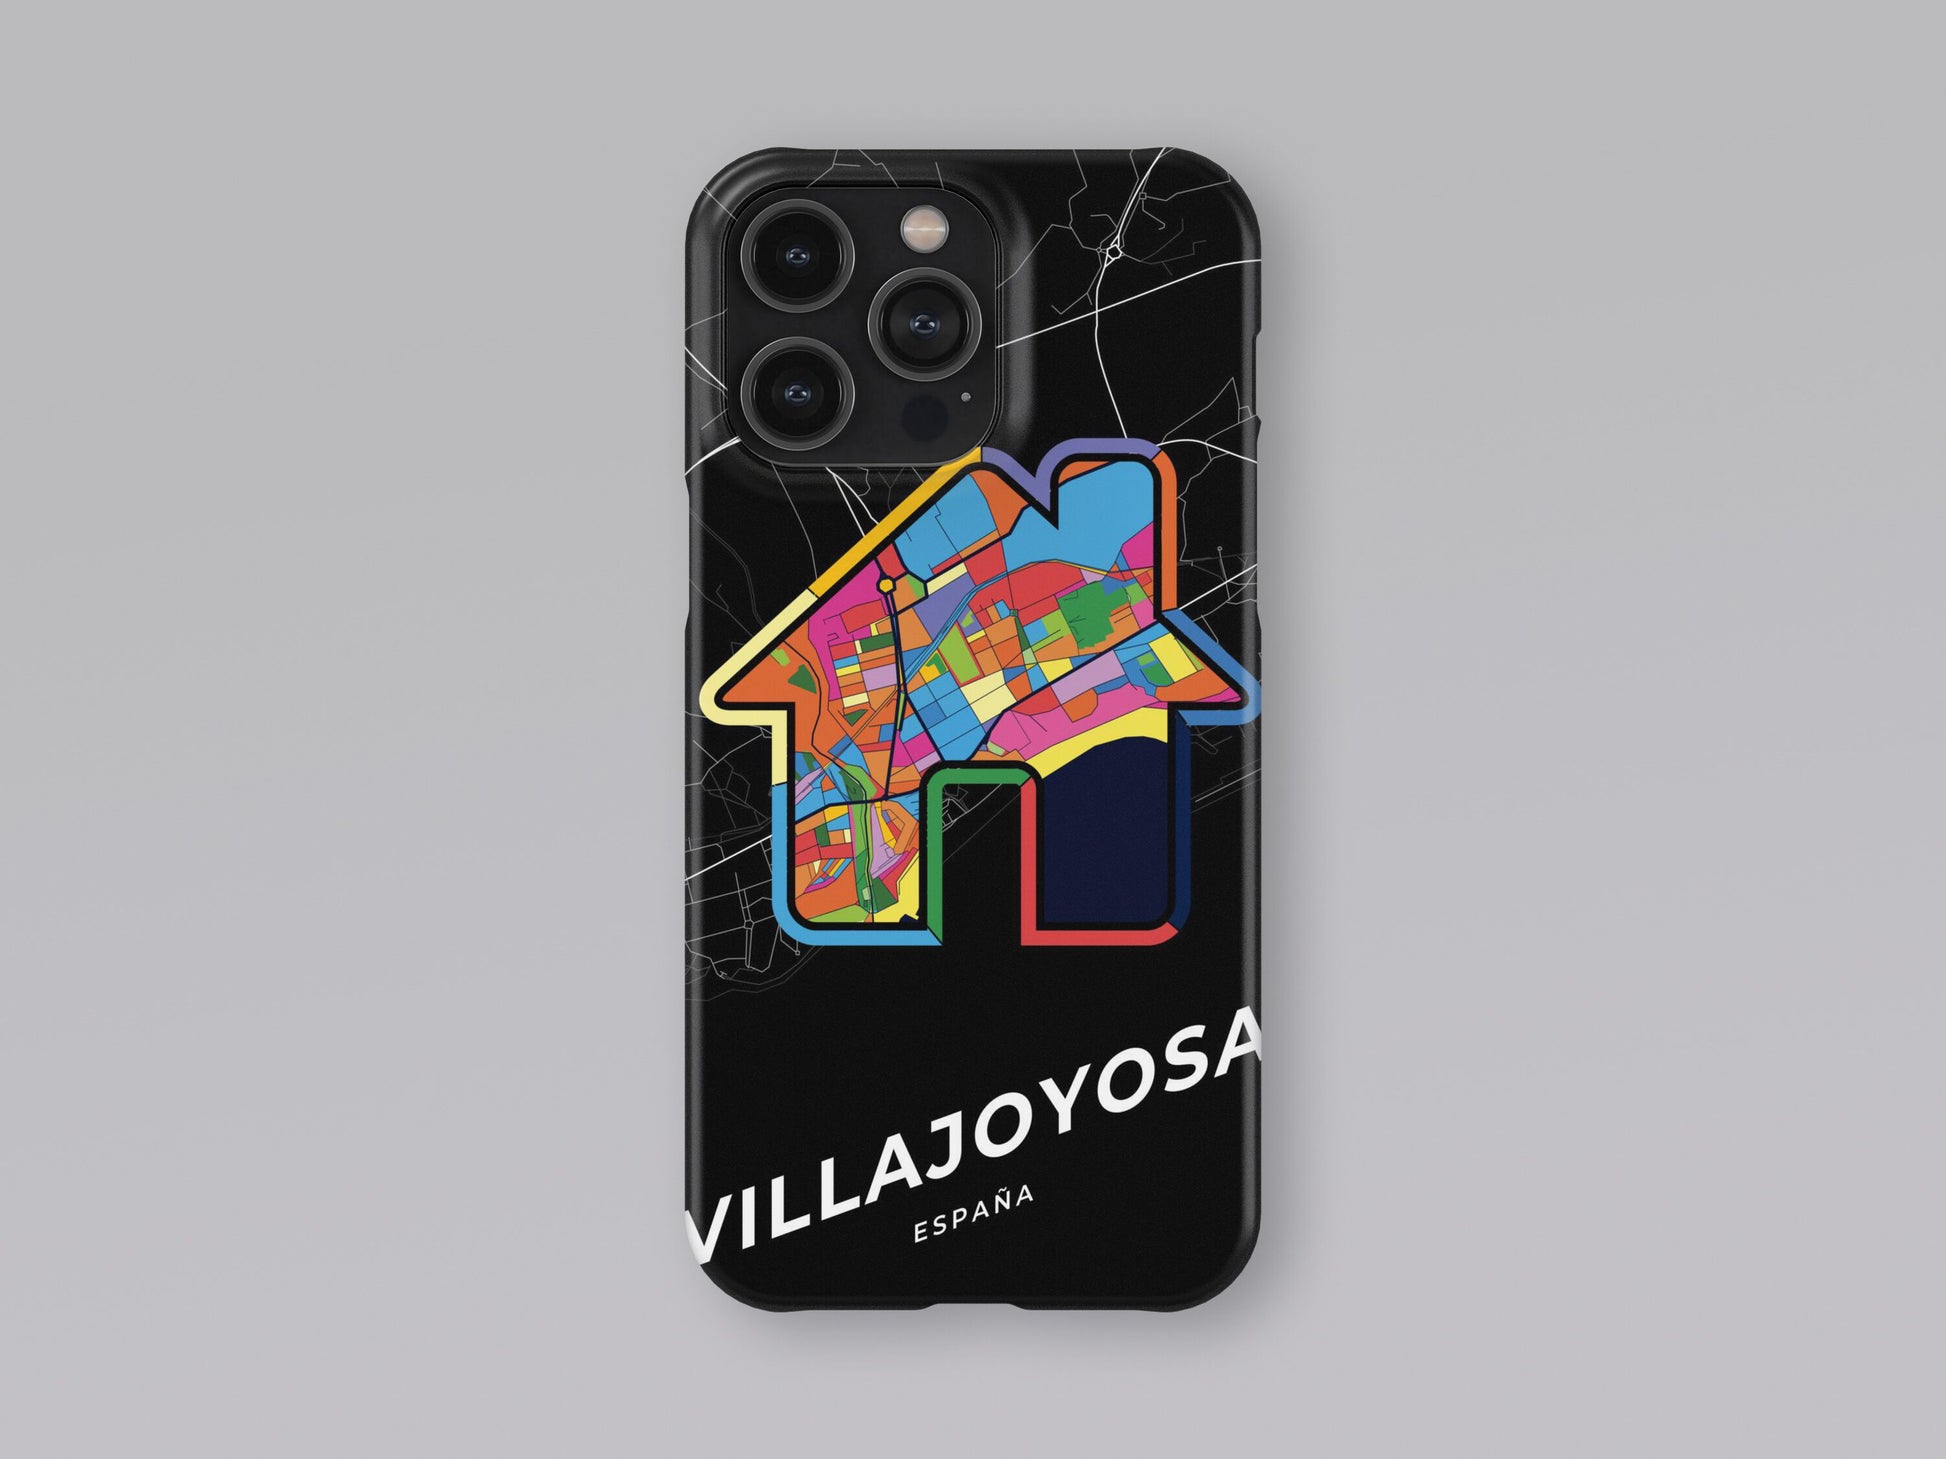 Villajoyosa Spain slim phone case with colorful icon 3